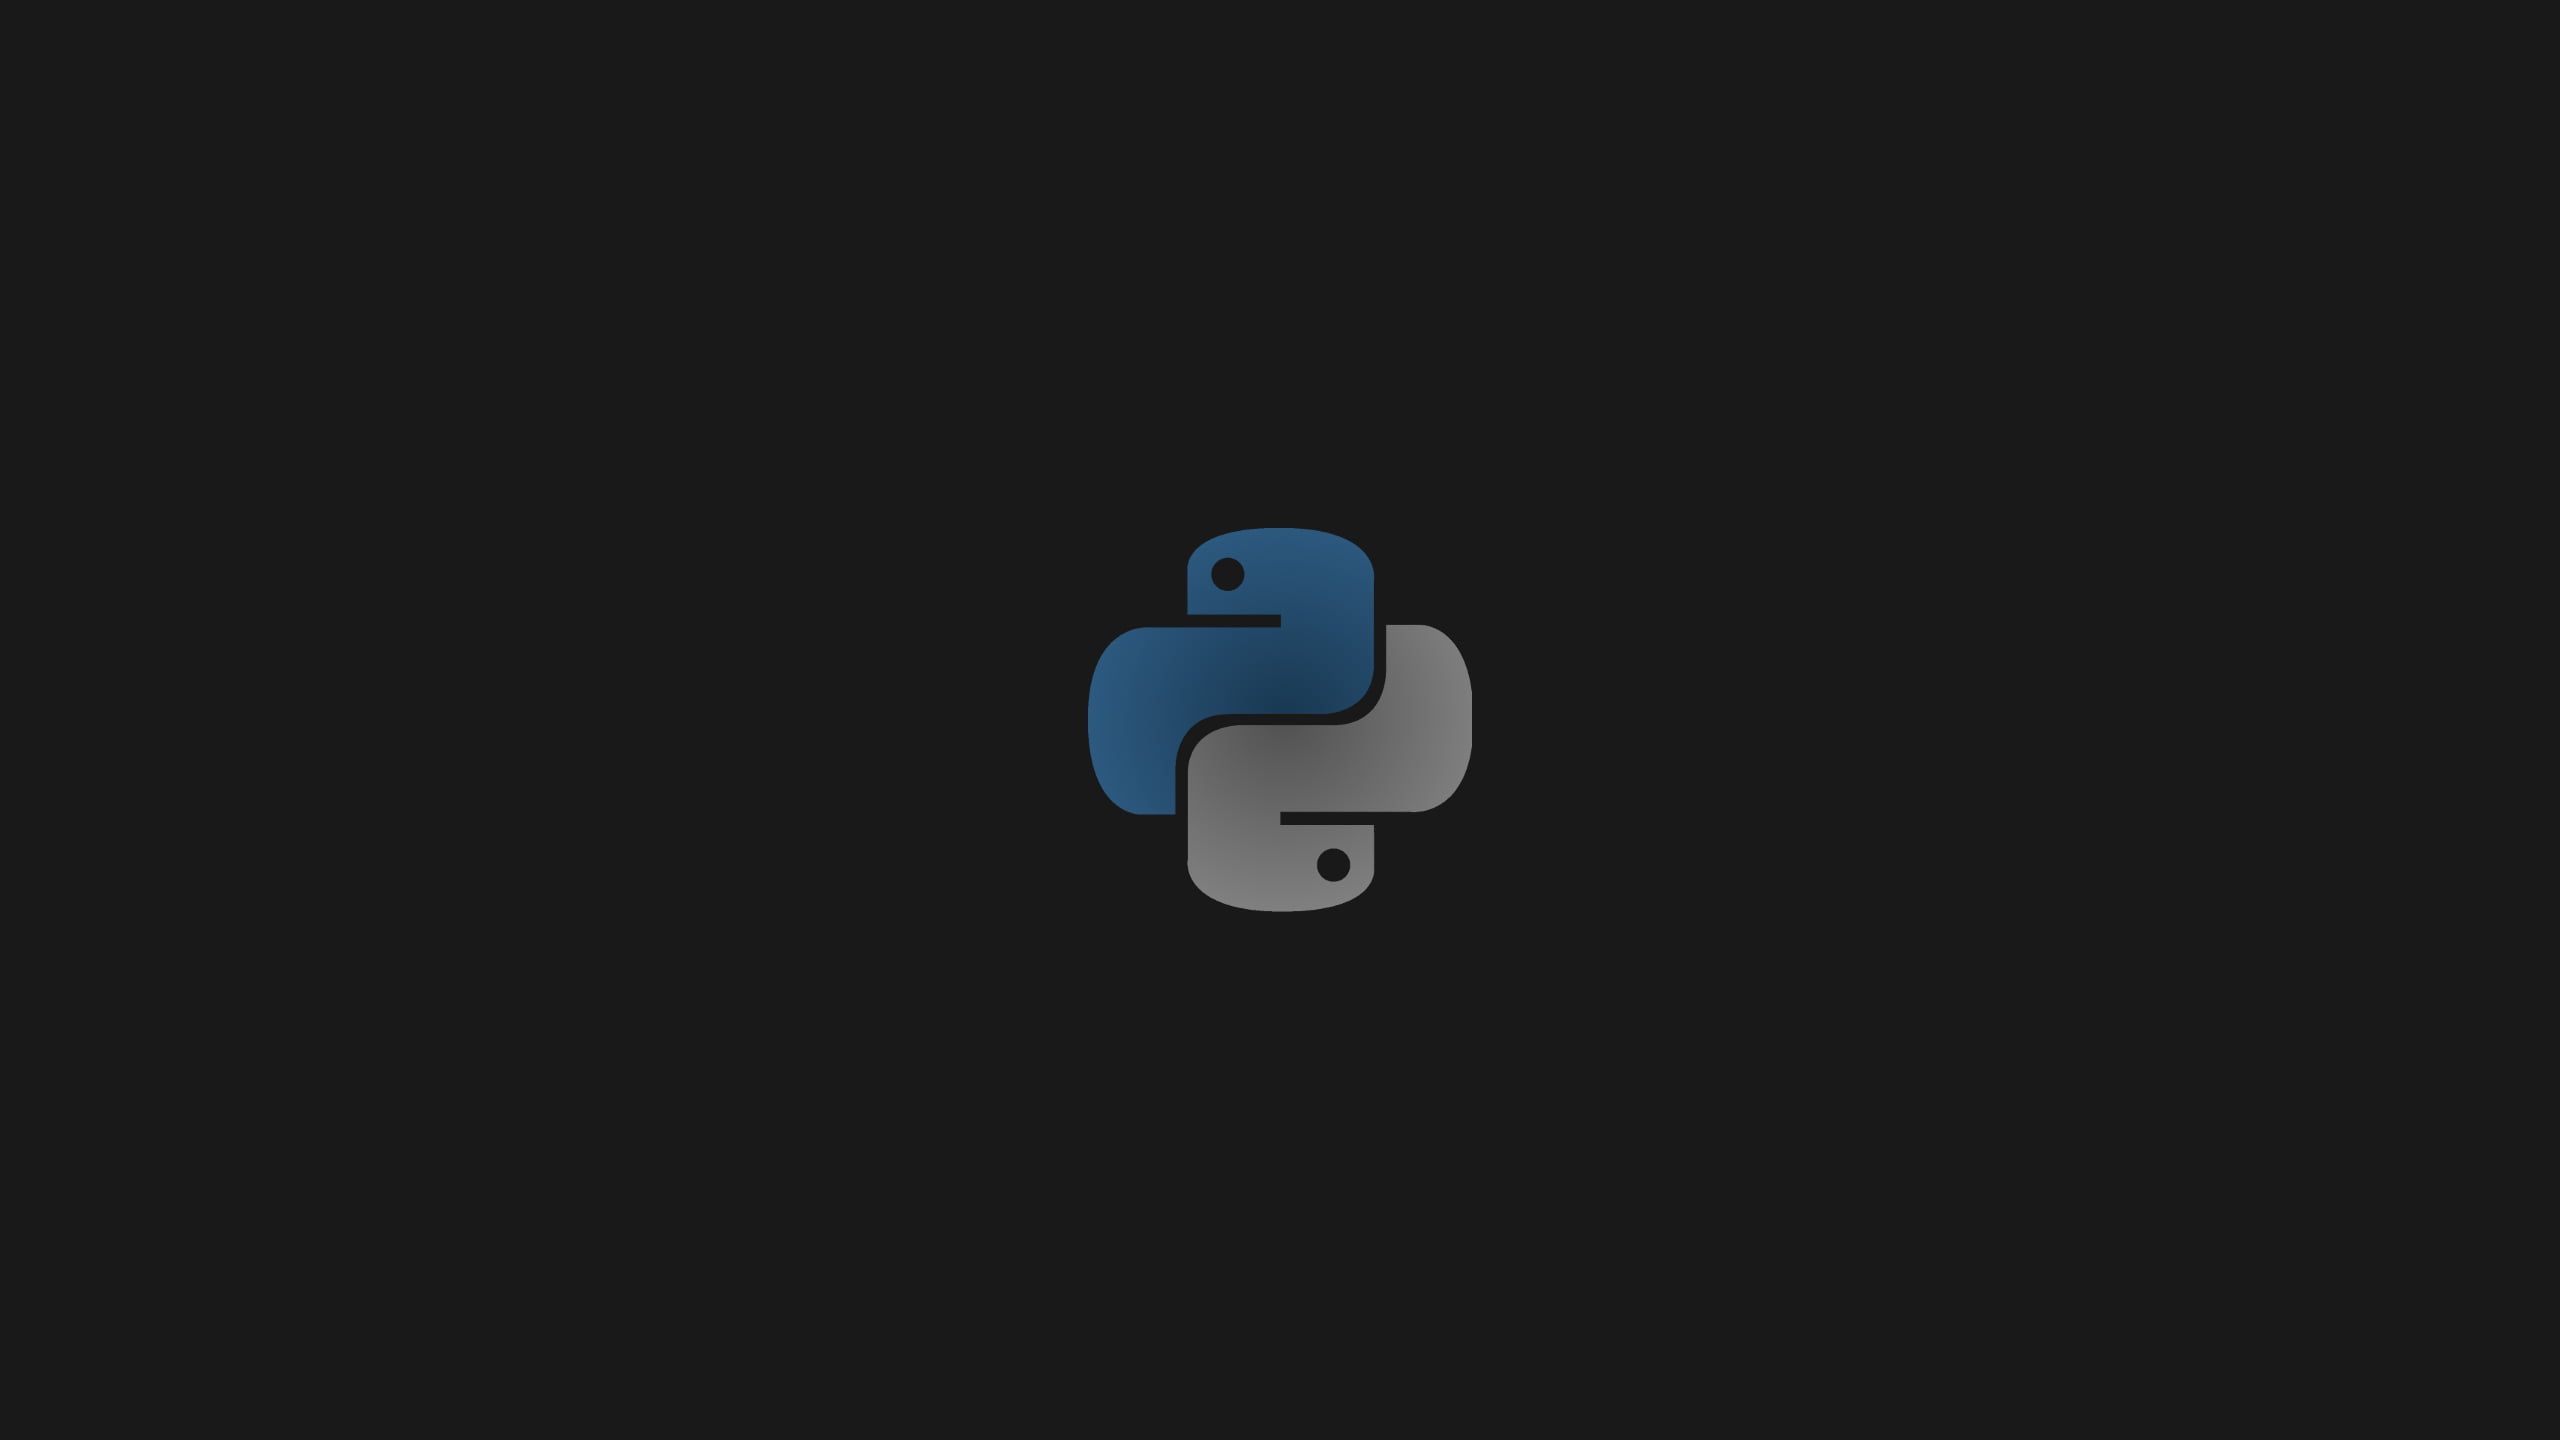 Python wallpaper programming minimalism grey technology